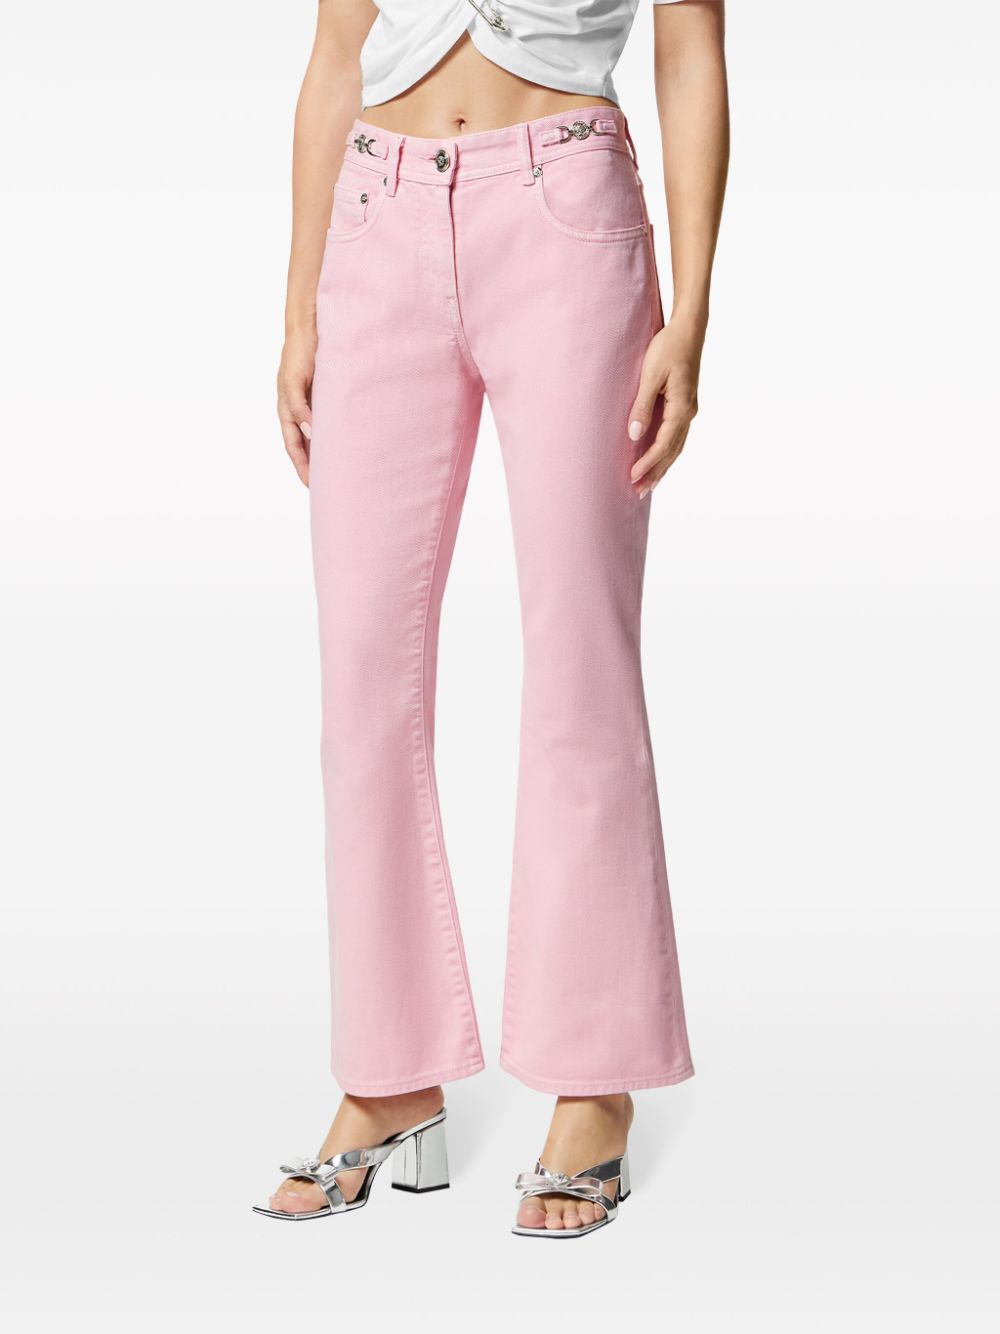 Pink cotton denim jeans